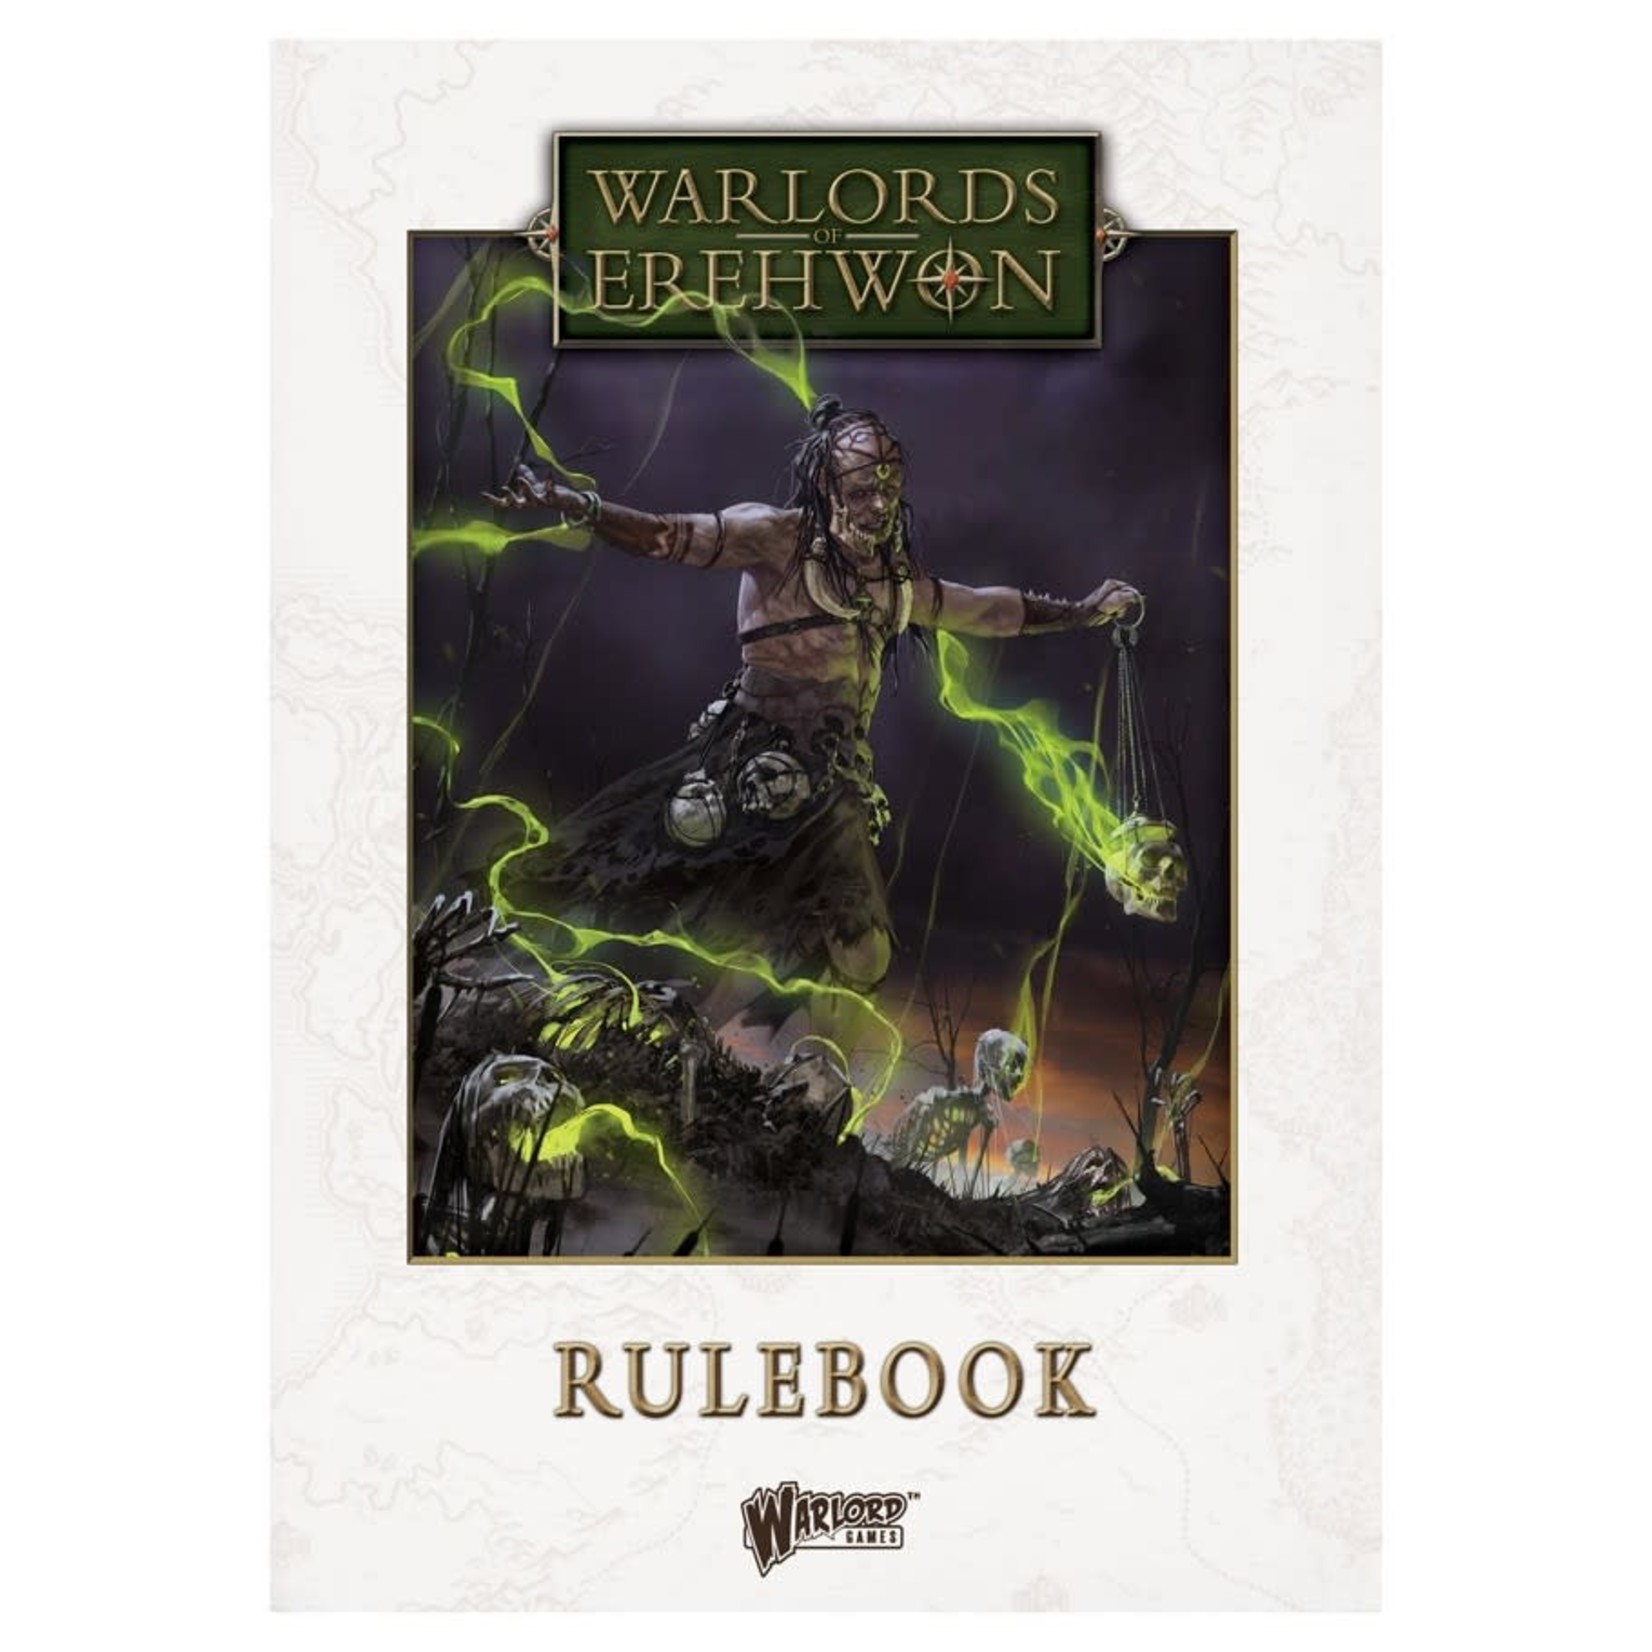 Warlord Games Warlords of Erehwon: Rulebook